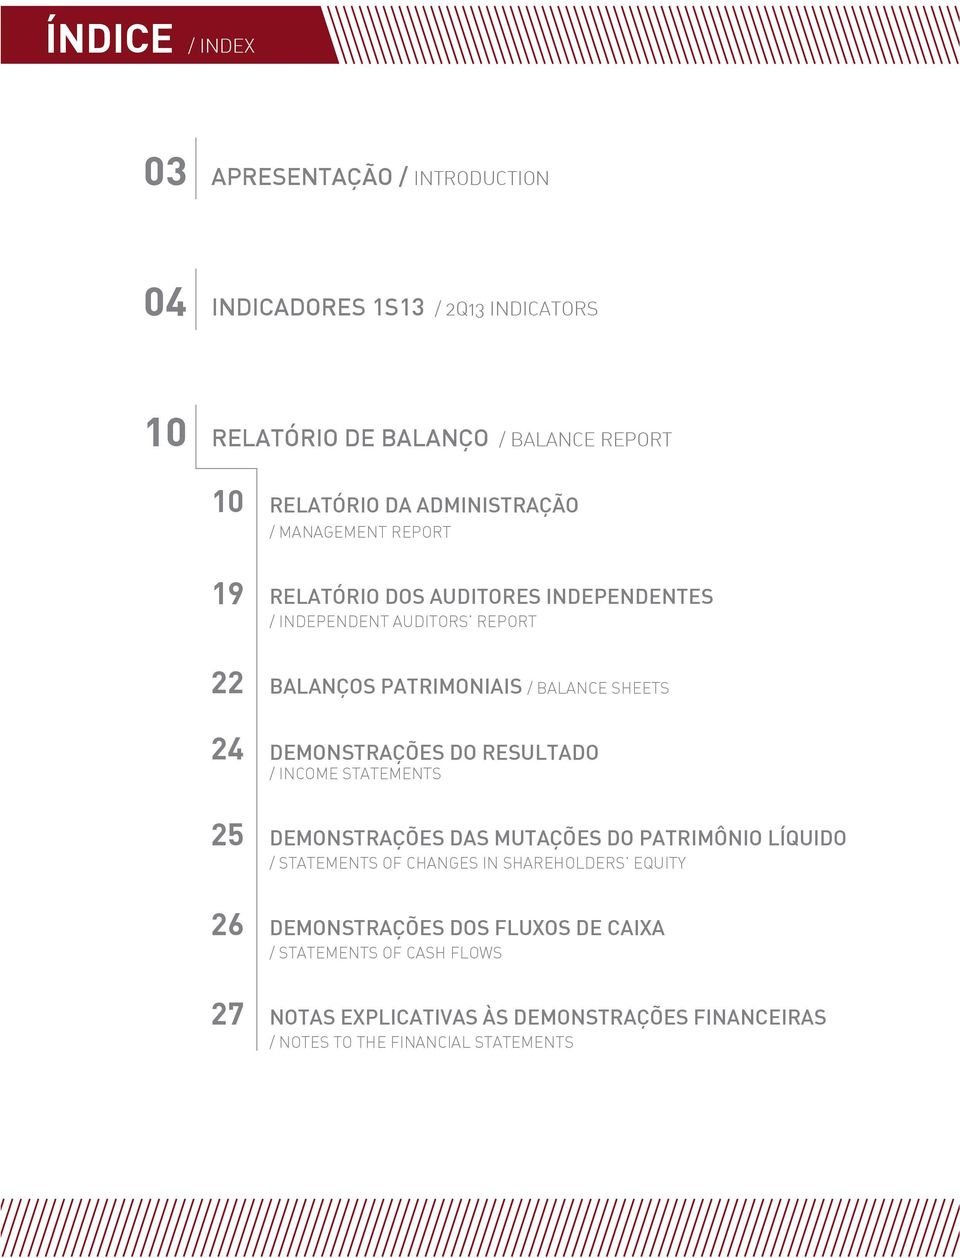 SHEETS DEMONSTRAÇÕES DO RESULTADO / INCOME STATEMENTS 25 DEMONSTRAÇÕES DAS MUTAÇÕES DO PATRIMÔNIO LÍQUIDO / STATEMENTS OF CHANGES IN SHAREHOLDERS